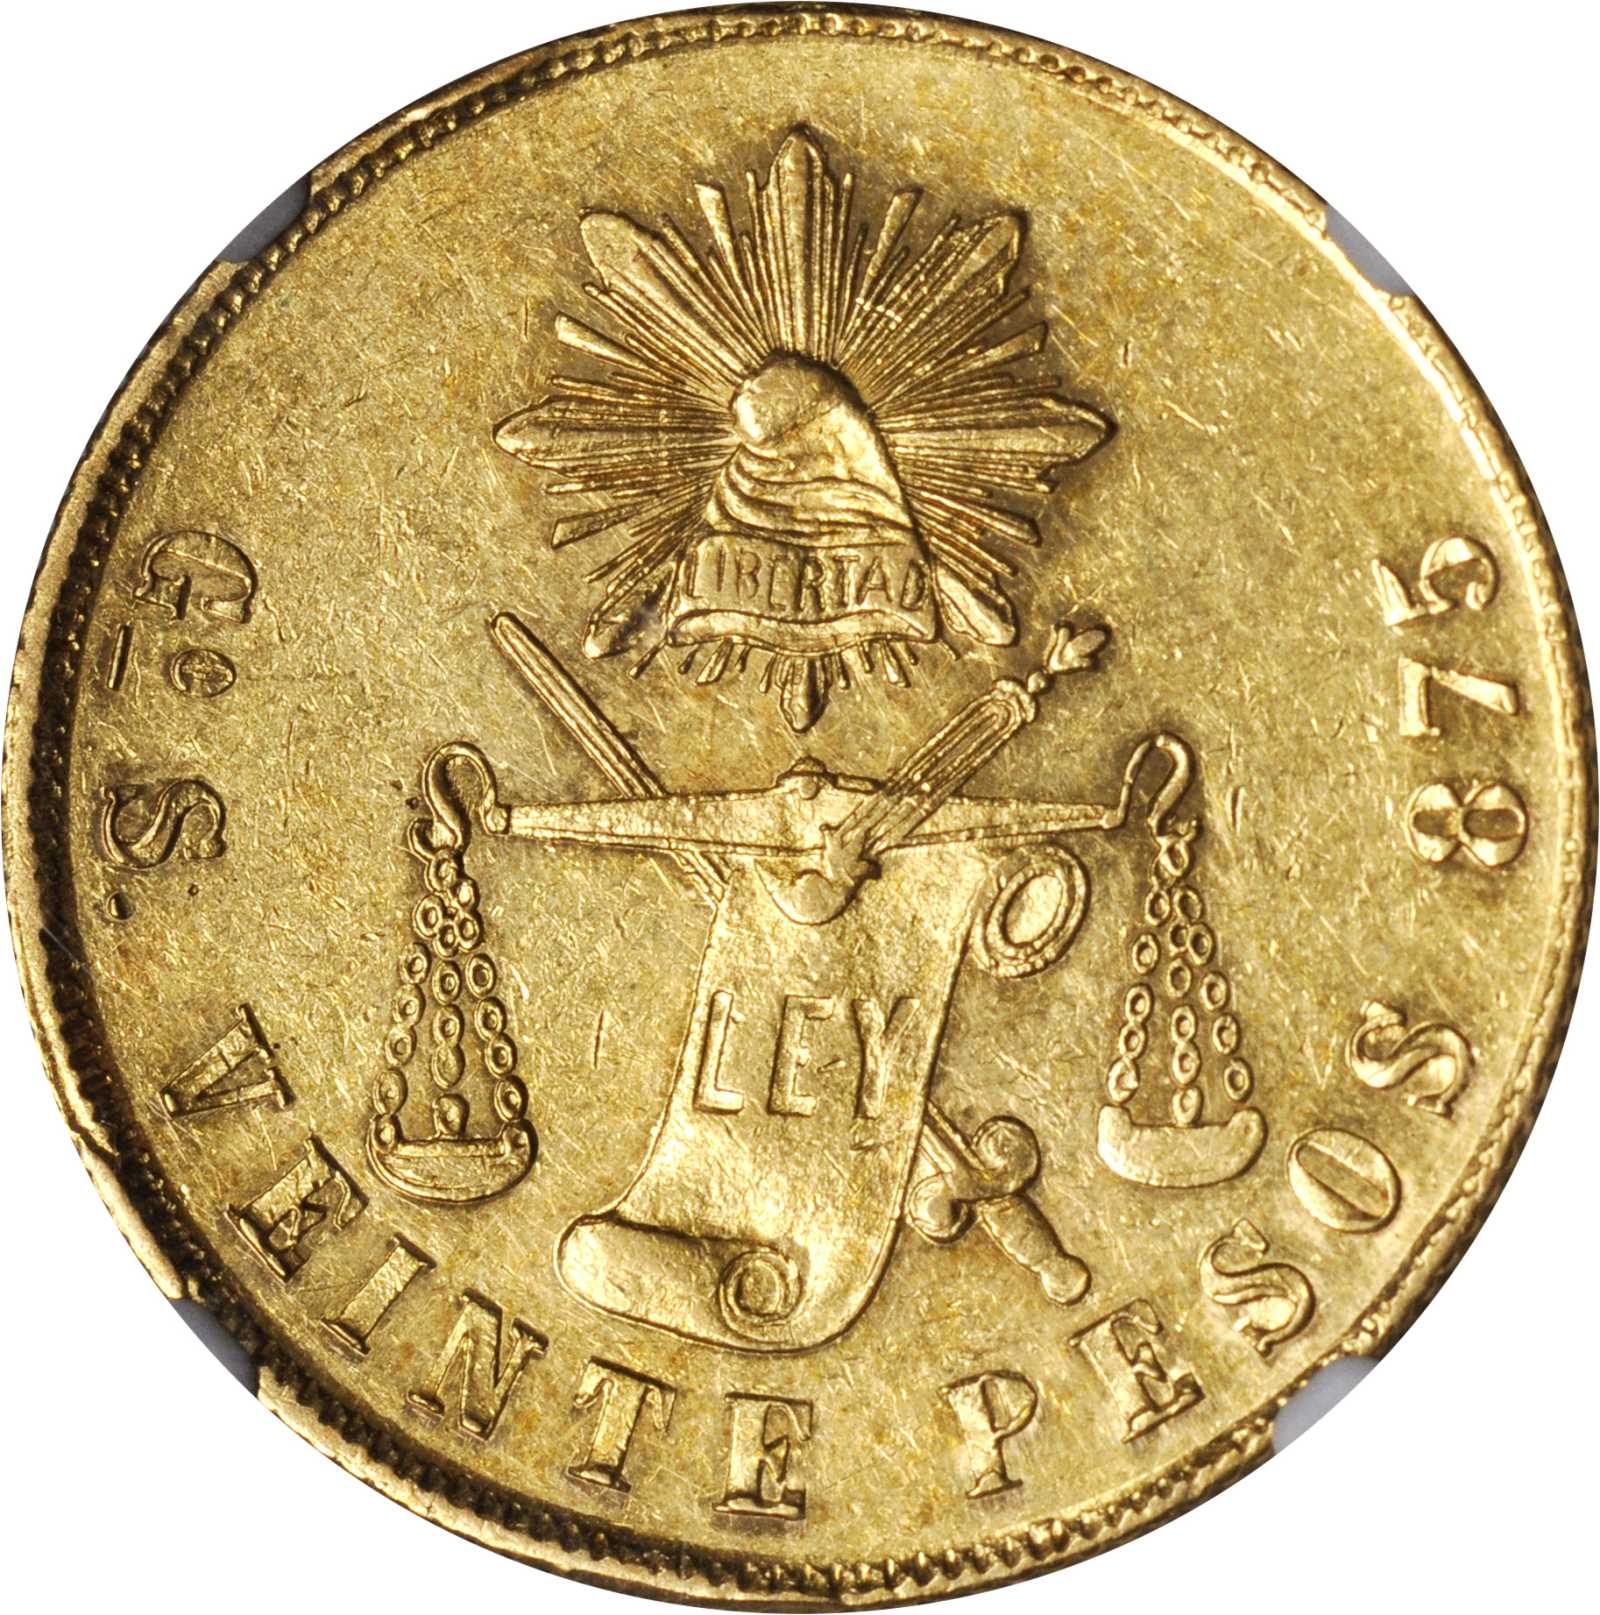 MEXICO. 20 Pesos, 1875-Go S. Guanajuato Mint. NGC AU-58. | Stacks 